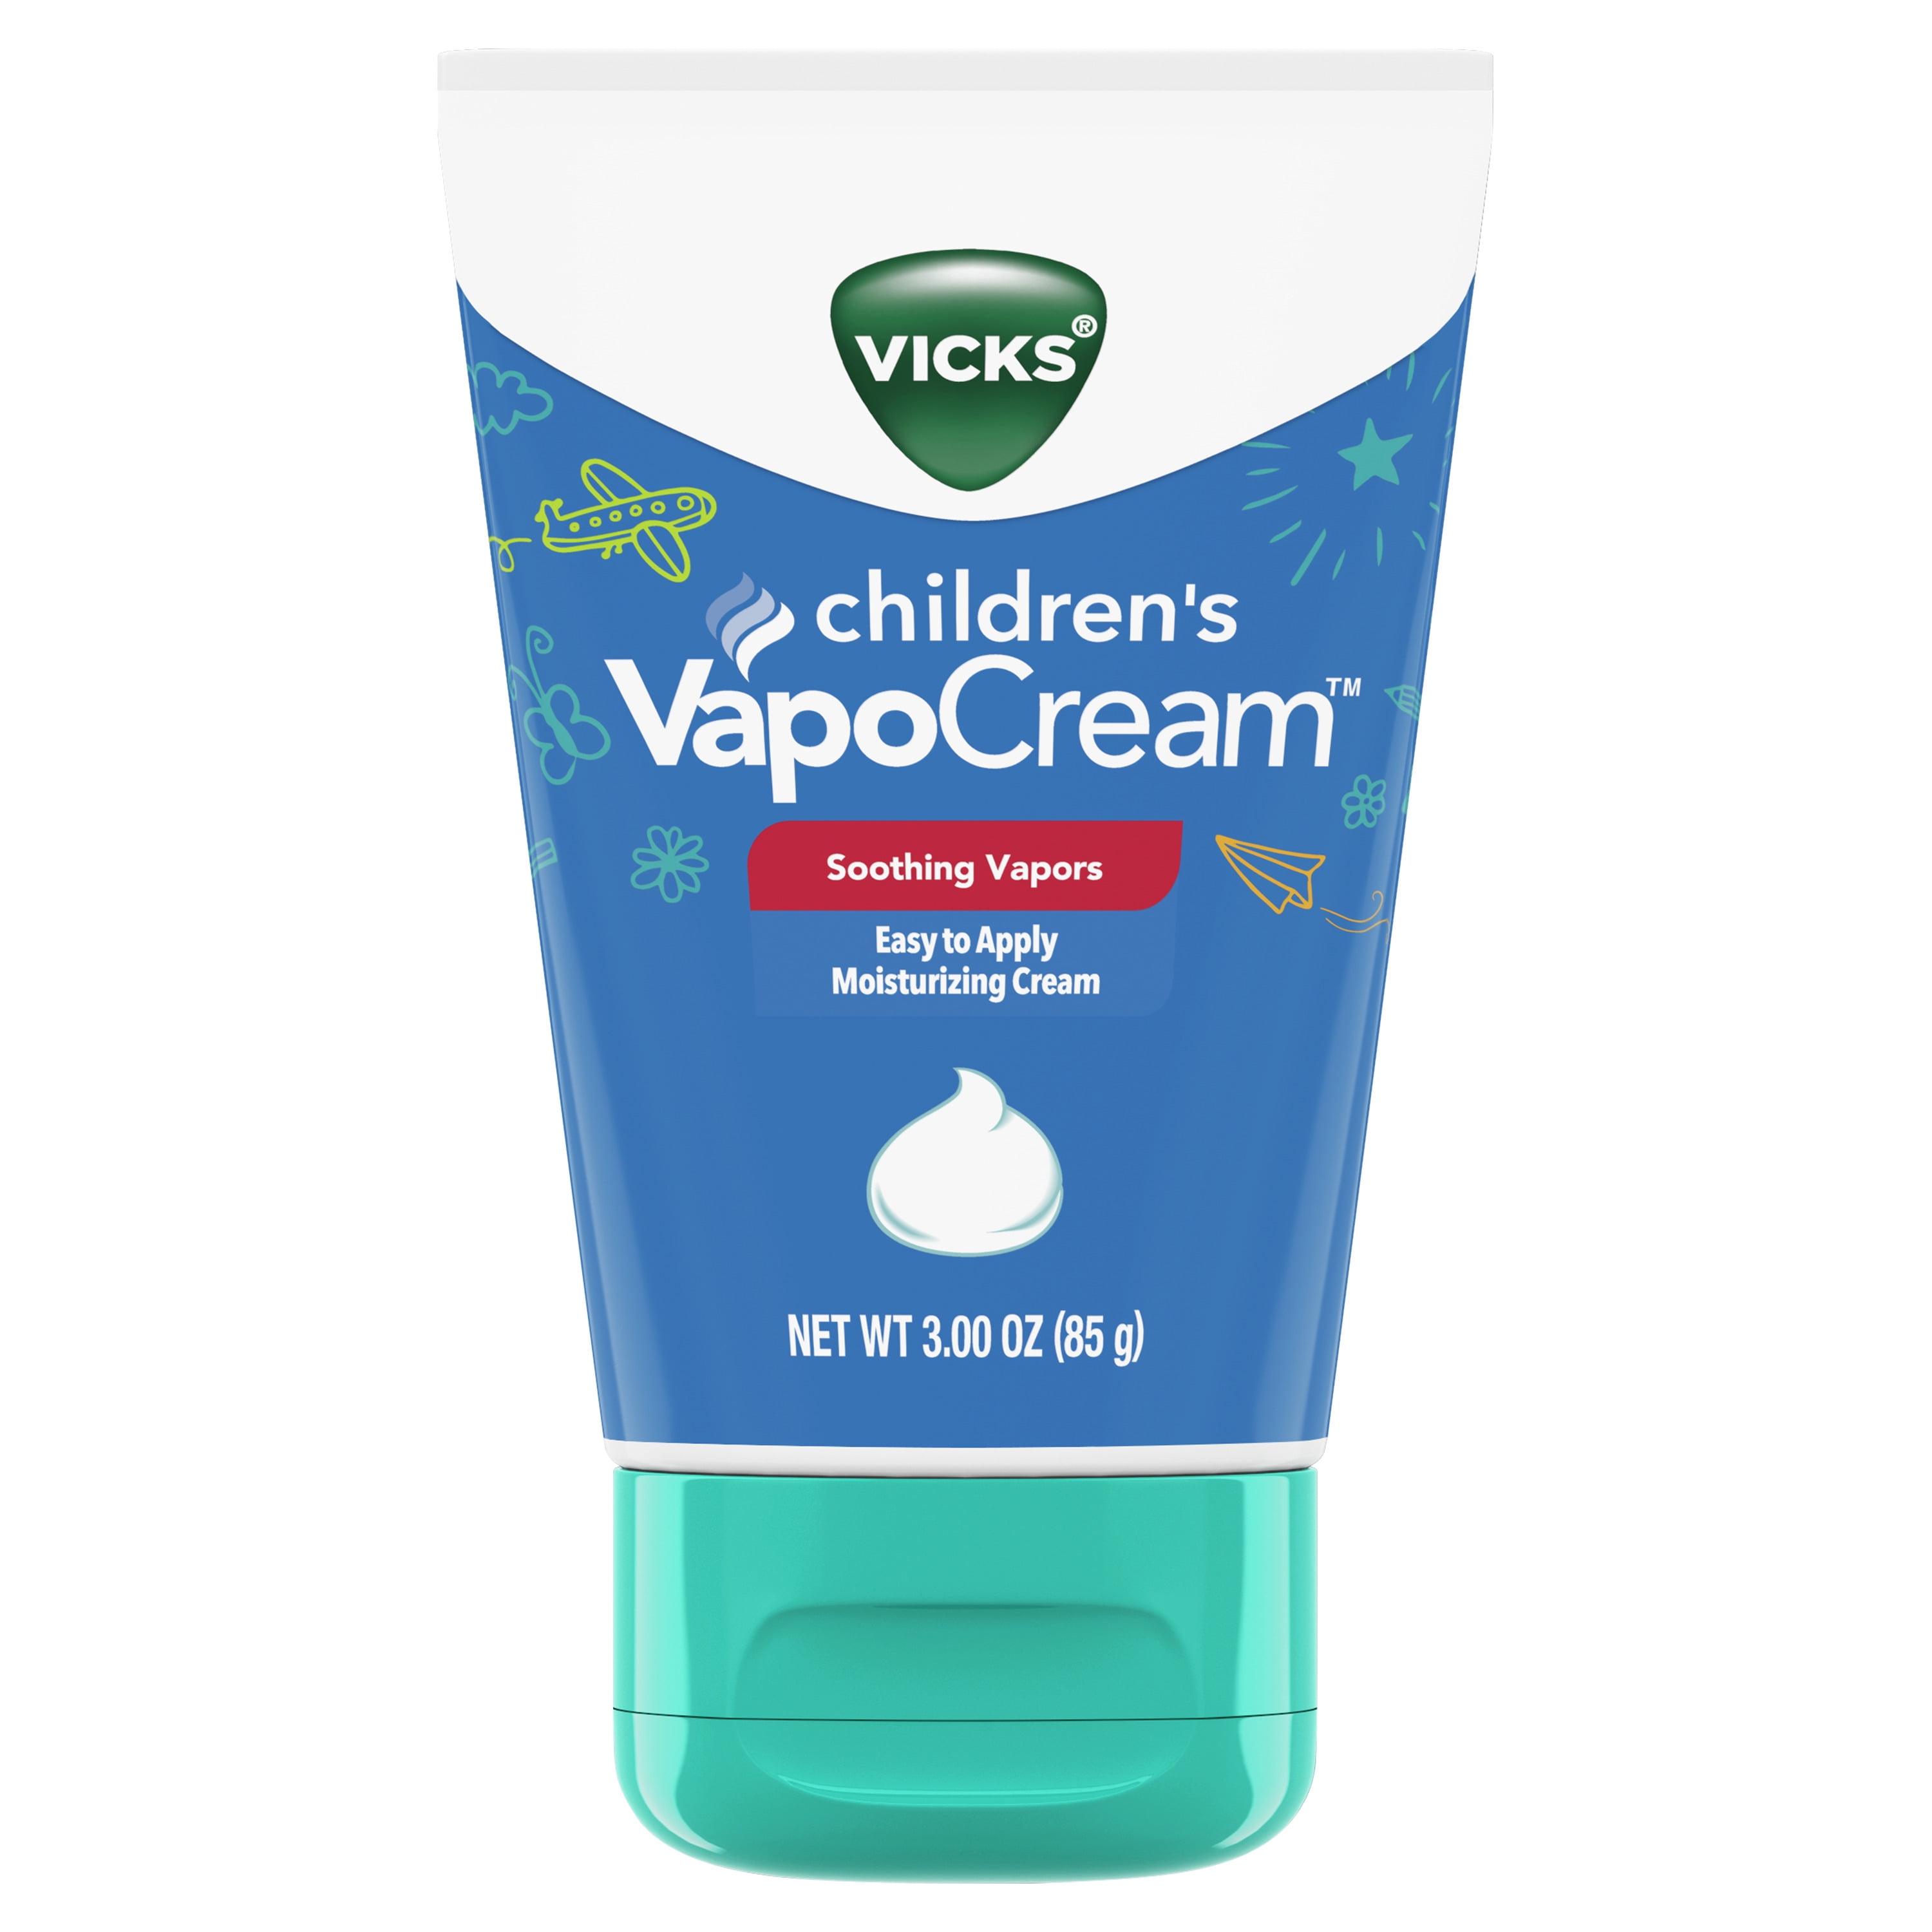 Vicks Non-Greasy Moisturizing Cream, Non-Medicated Vicks Vapors